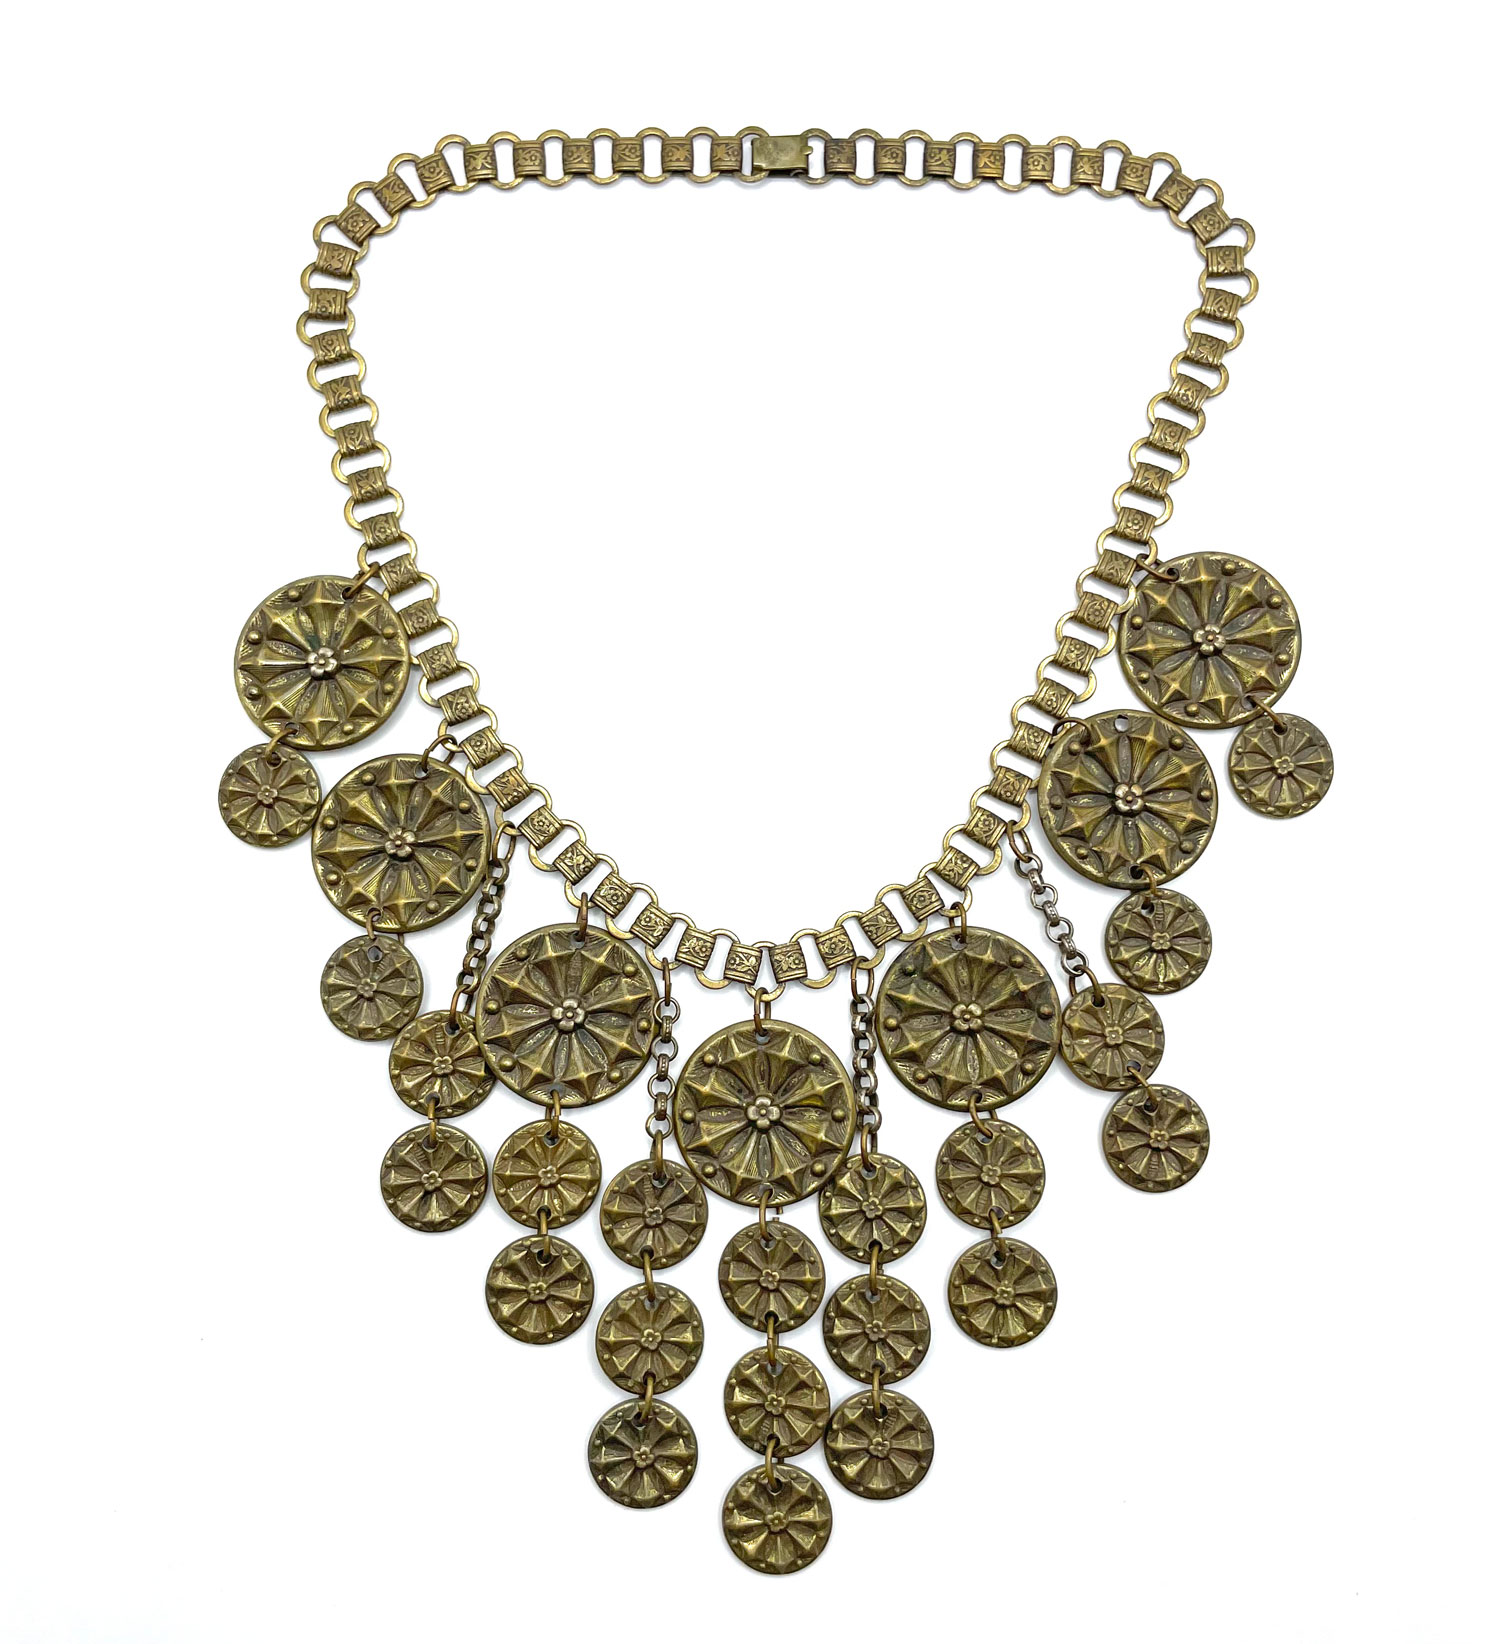 Bib necklace by Monet